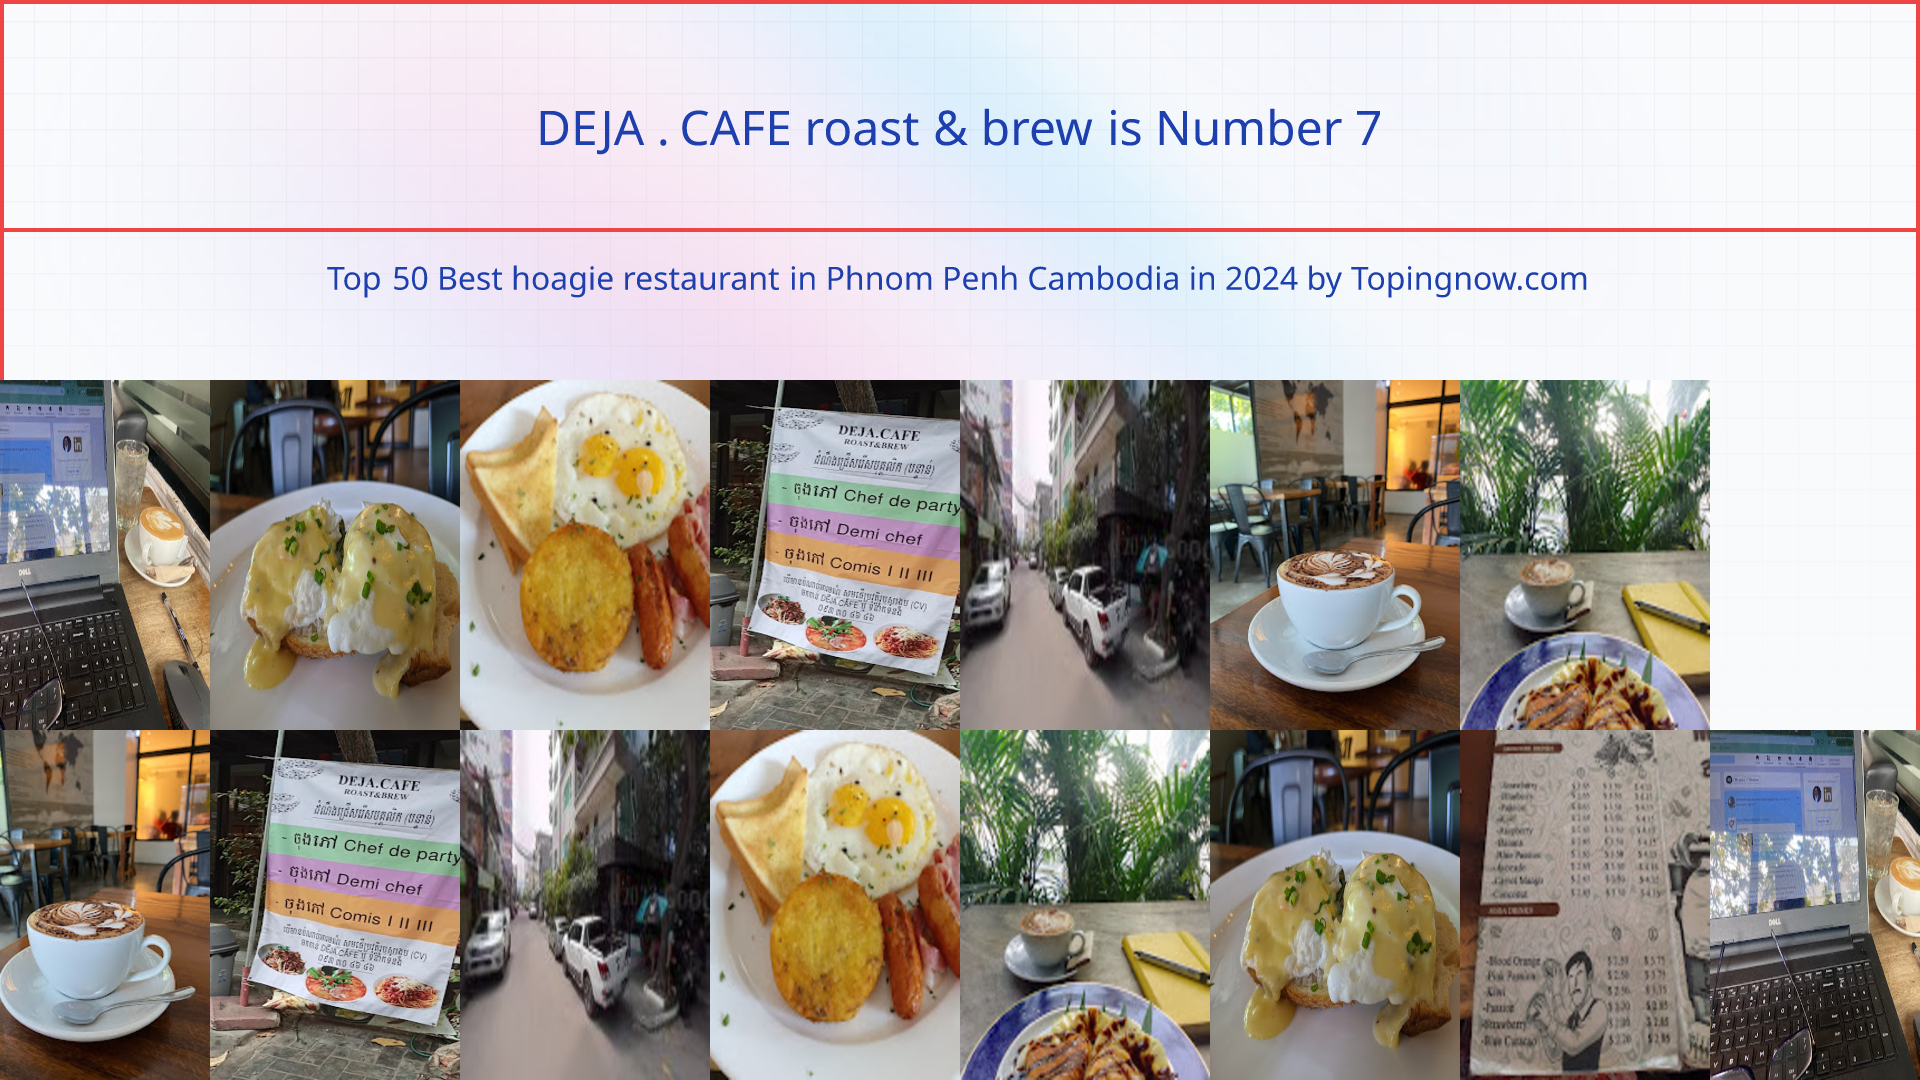 DEJA . CAFE roast & brew: Top 50 Best hoagie restaurant in Phnom Penh Cambodia in 2024